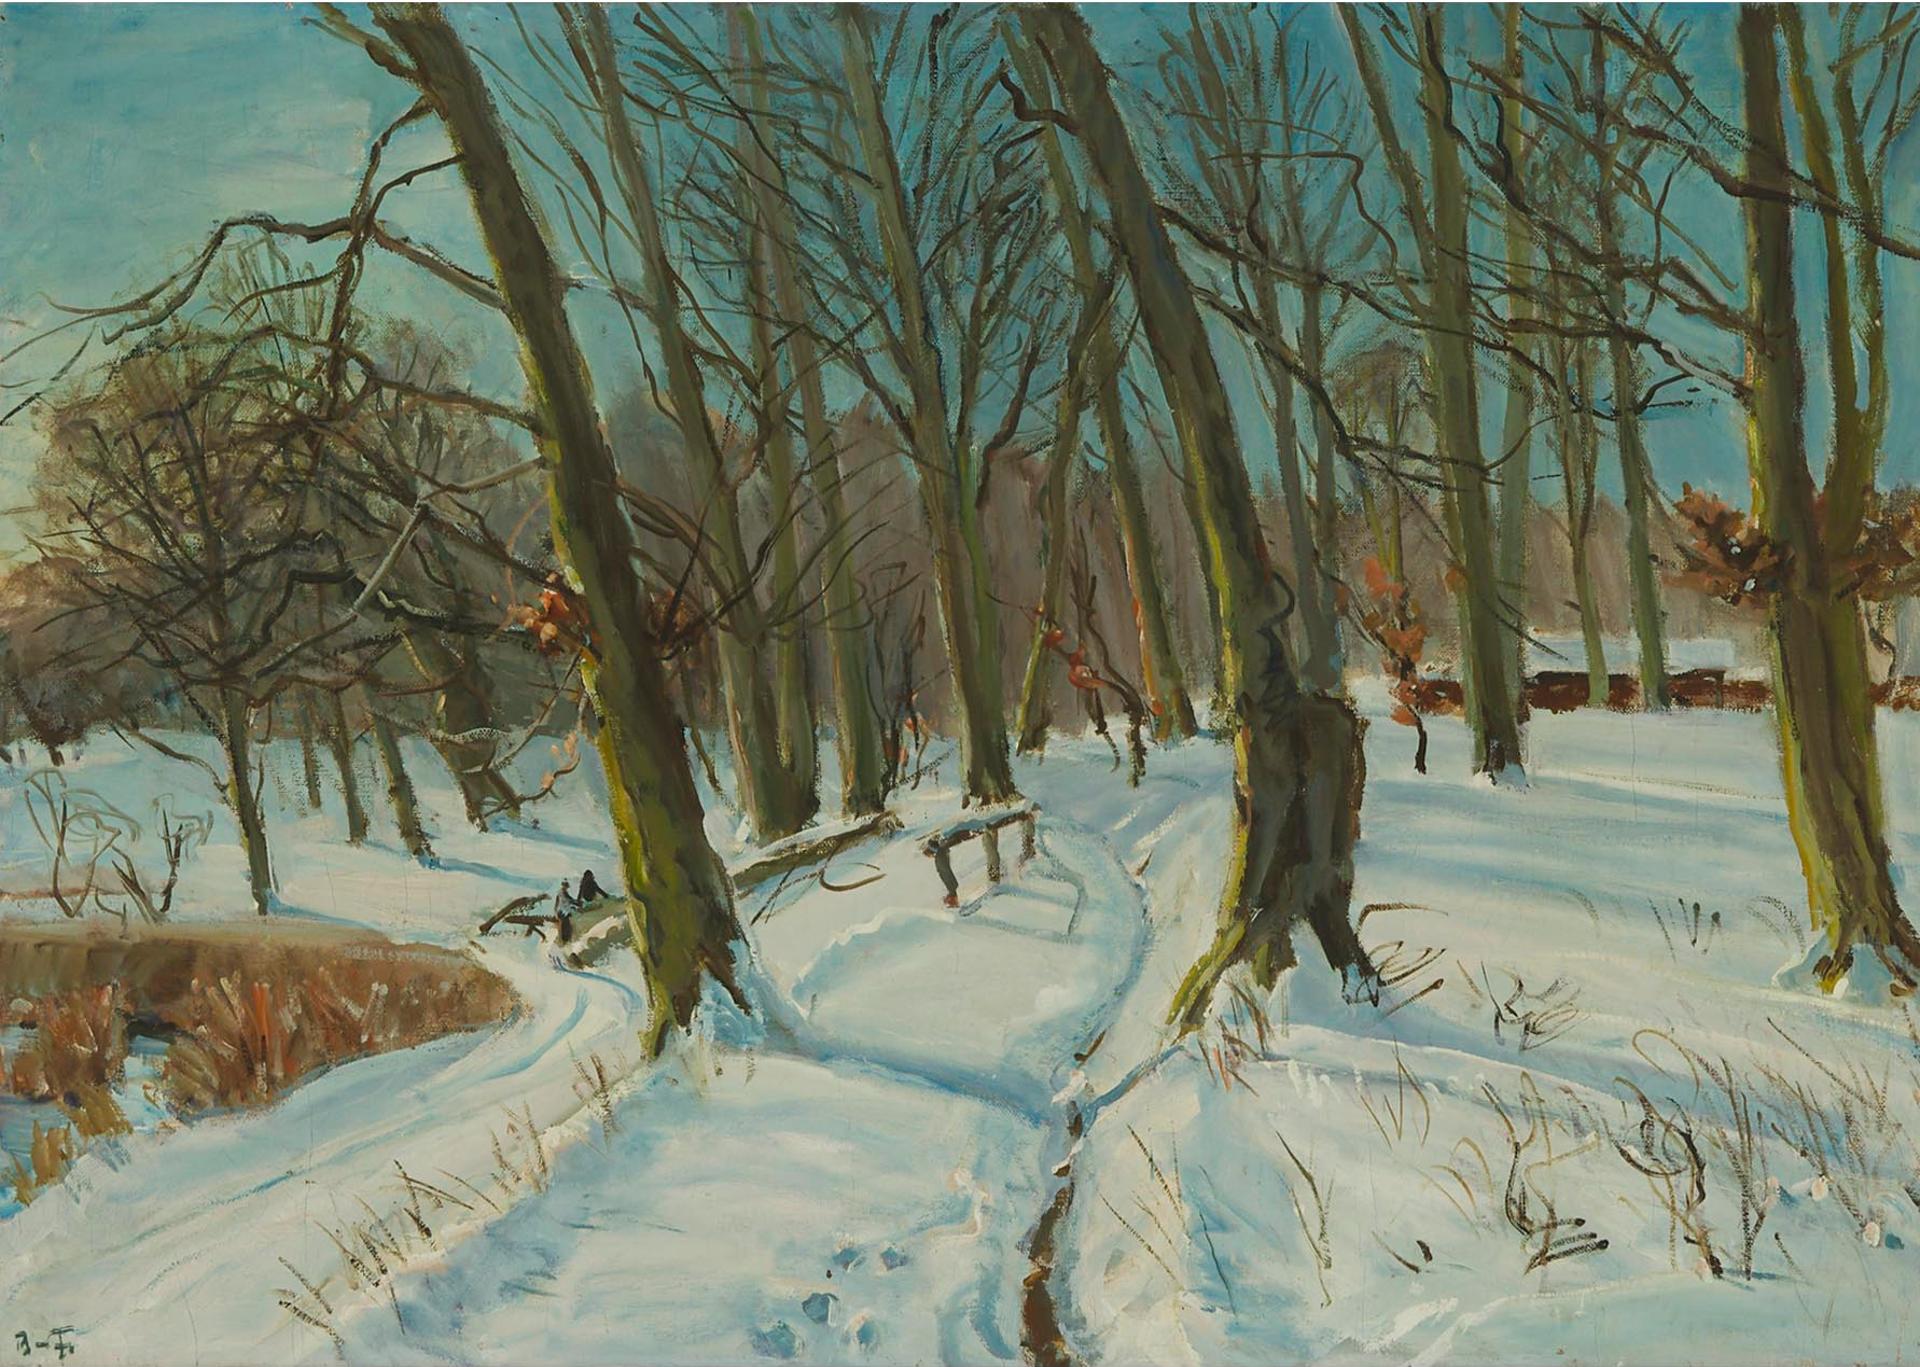 Aage Bernard Frederiksen (1883-1963) - Snowy Trail Through Woods